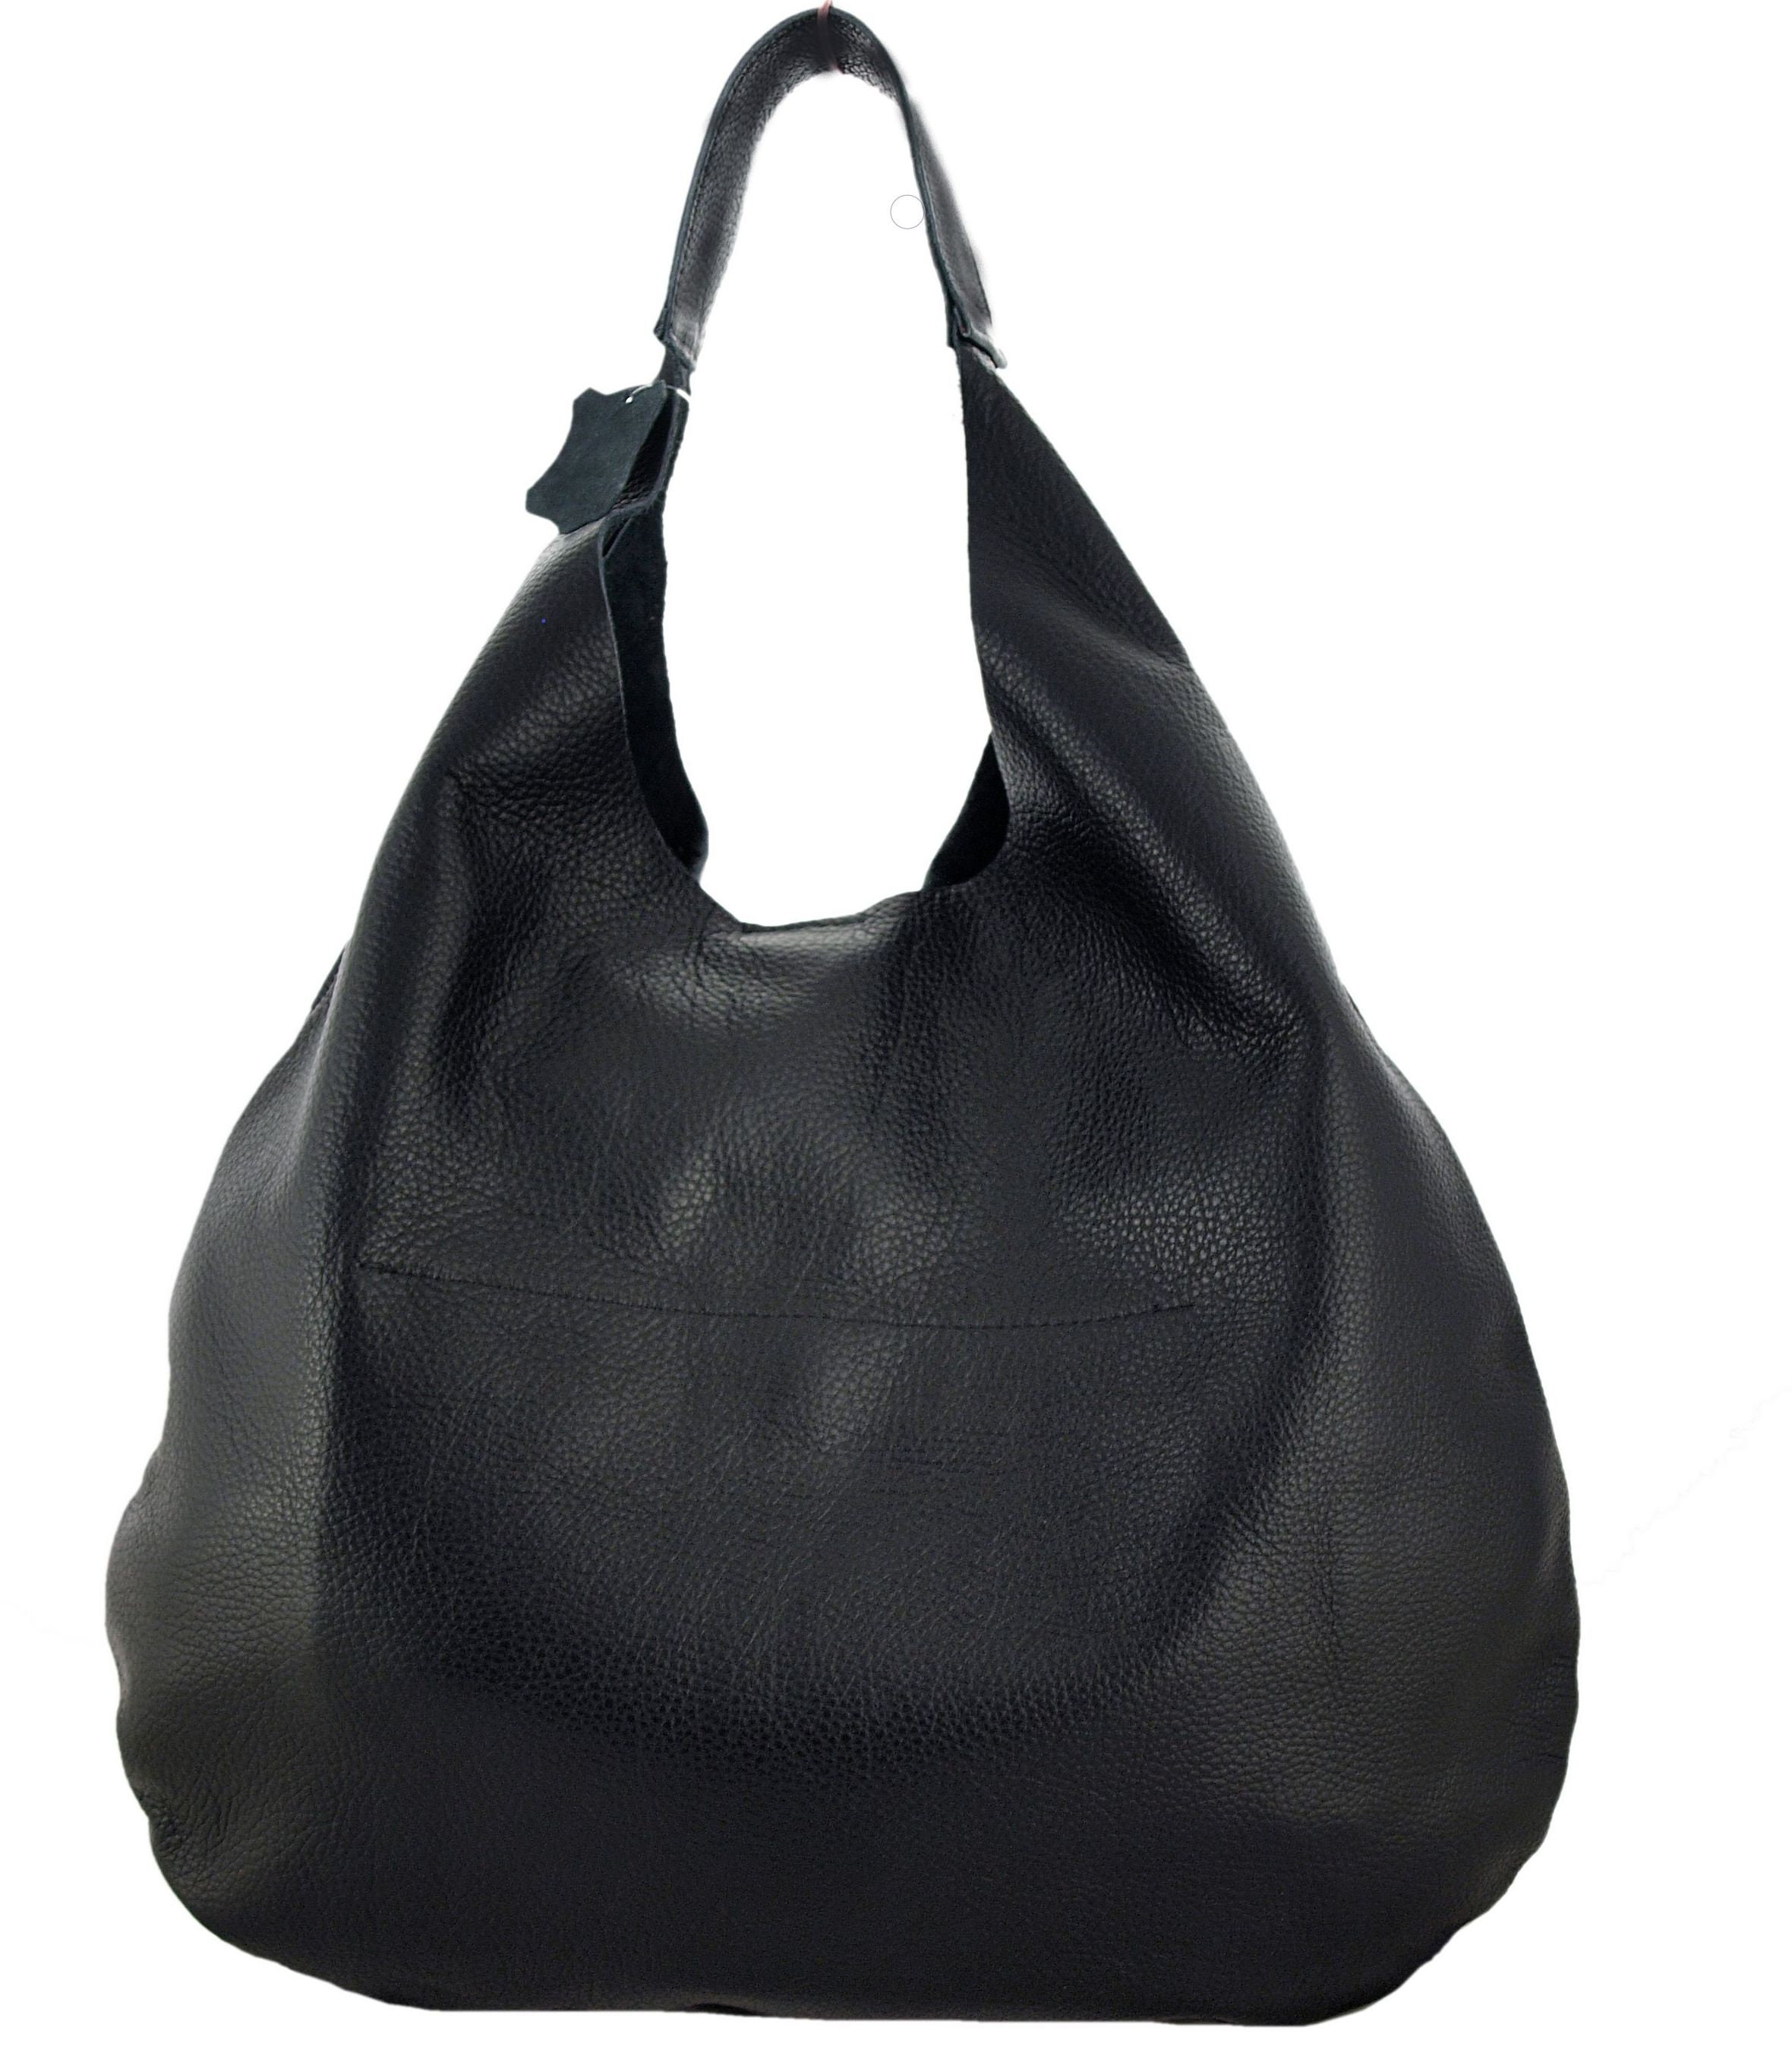 Large Black Leather Handbag Tote slouchy hobo leather bag | Etsy